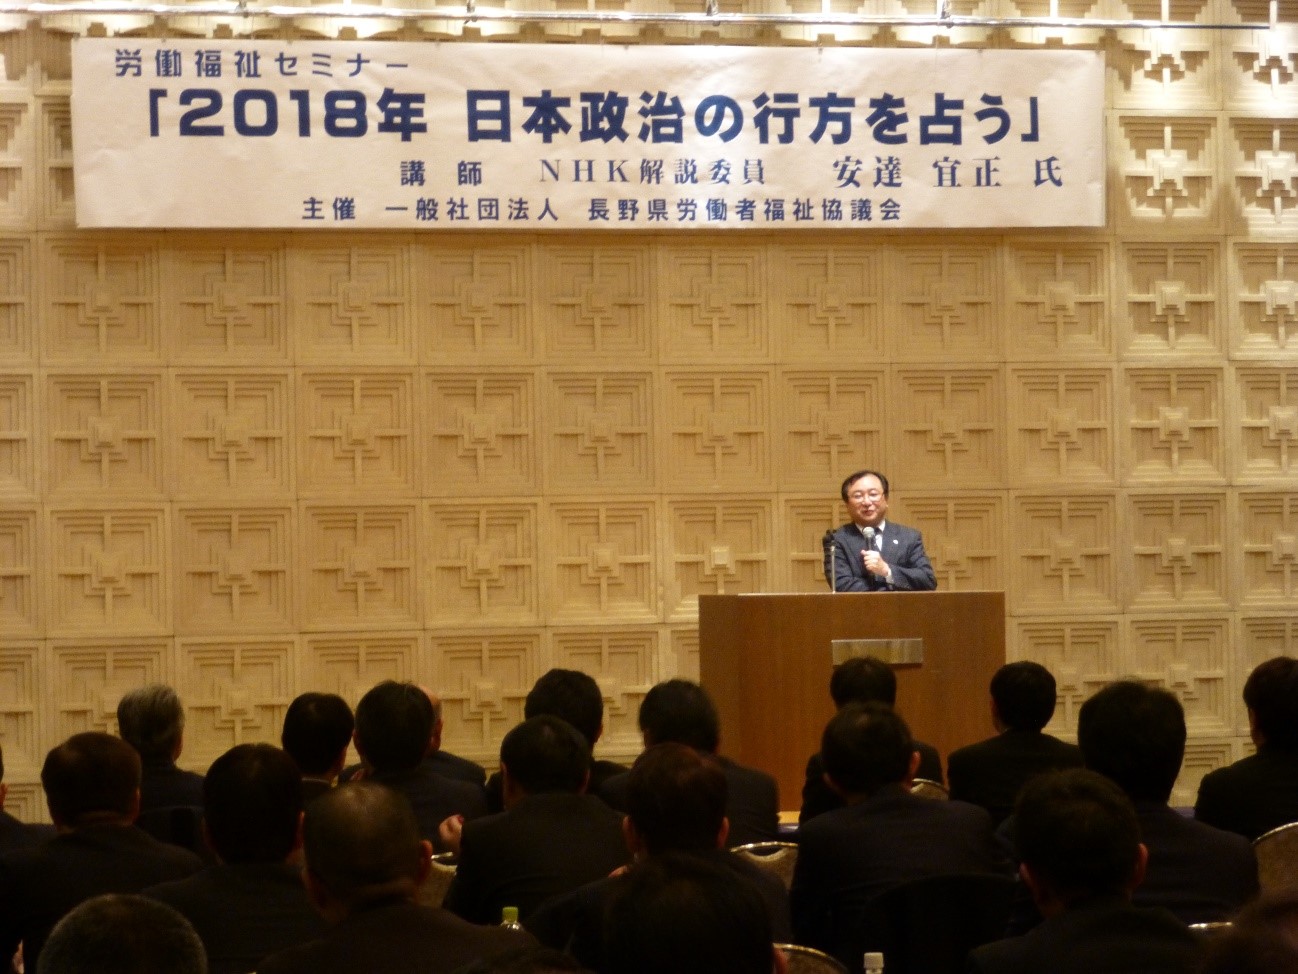 NHK安達氏による講演「２０１８年日本政治の行方を占う」